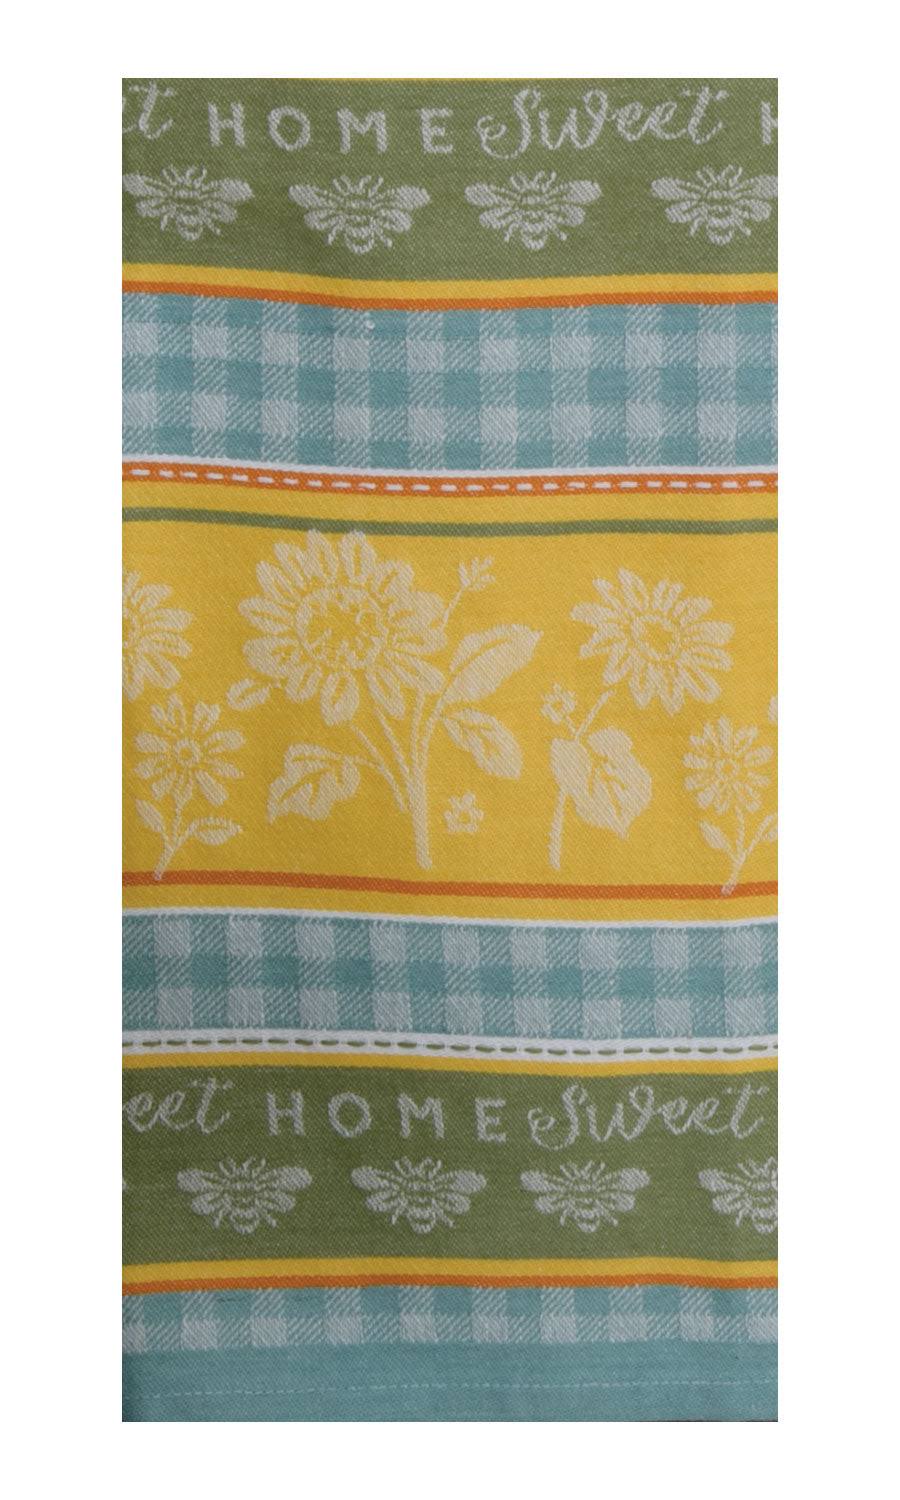 Kay Dee Designs Sunflowers Forever Jacquard Tea Towel